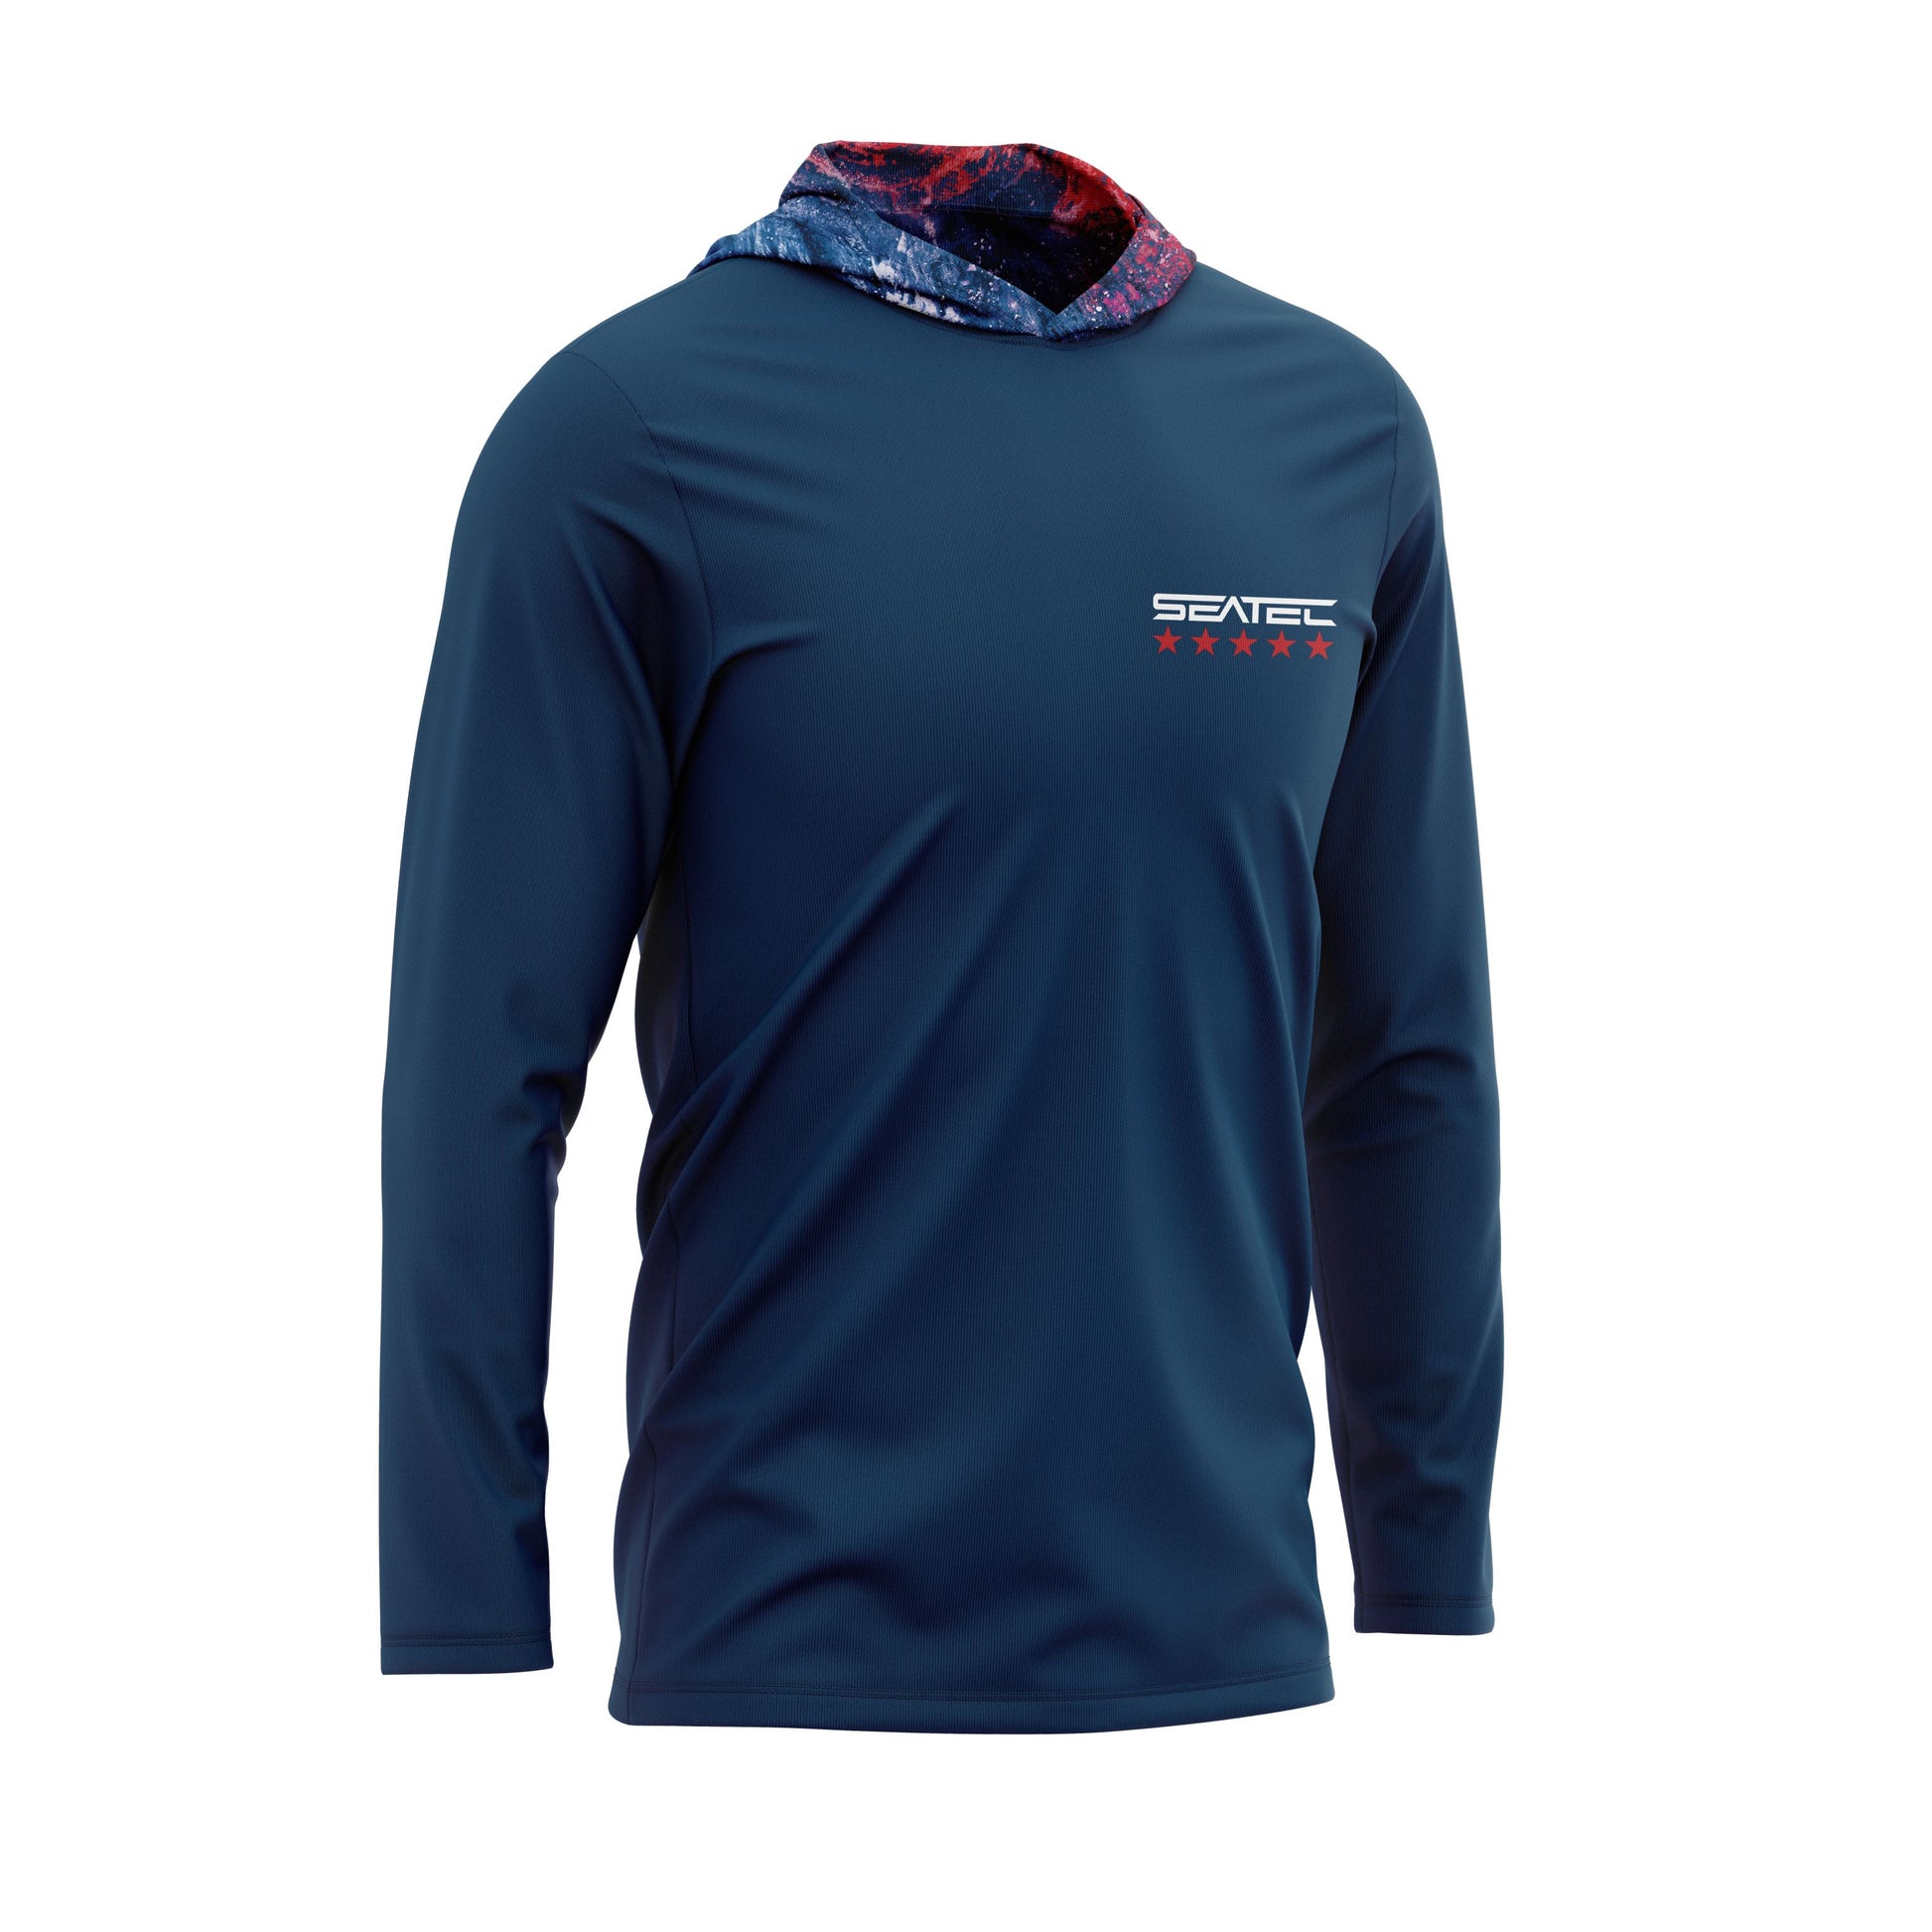 Spindrift - Men's Hooded Performance Fishing Shirt - Best Sun Shirts - Multi-Seasonal - UPF 50+ - Long Sleeve Fishing Shirt - L